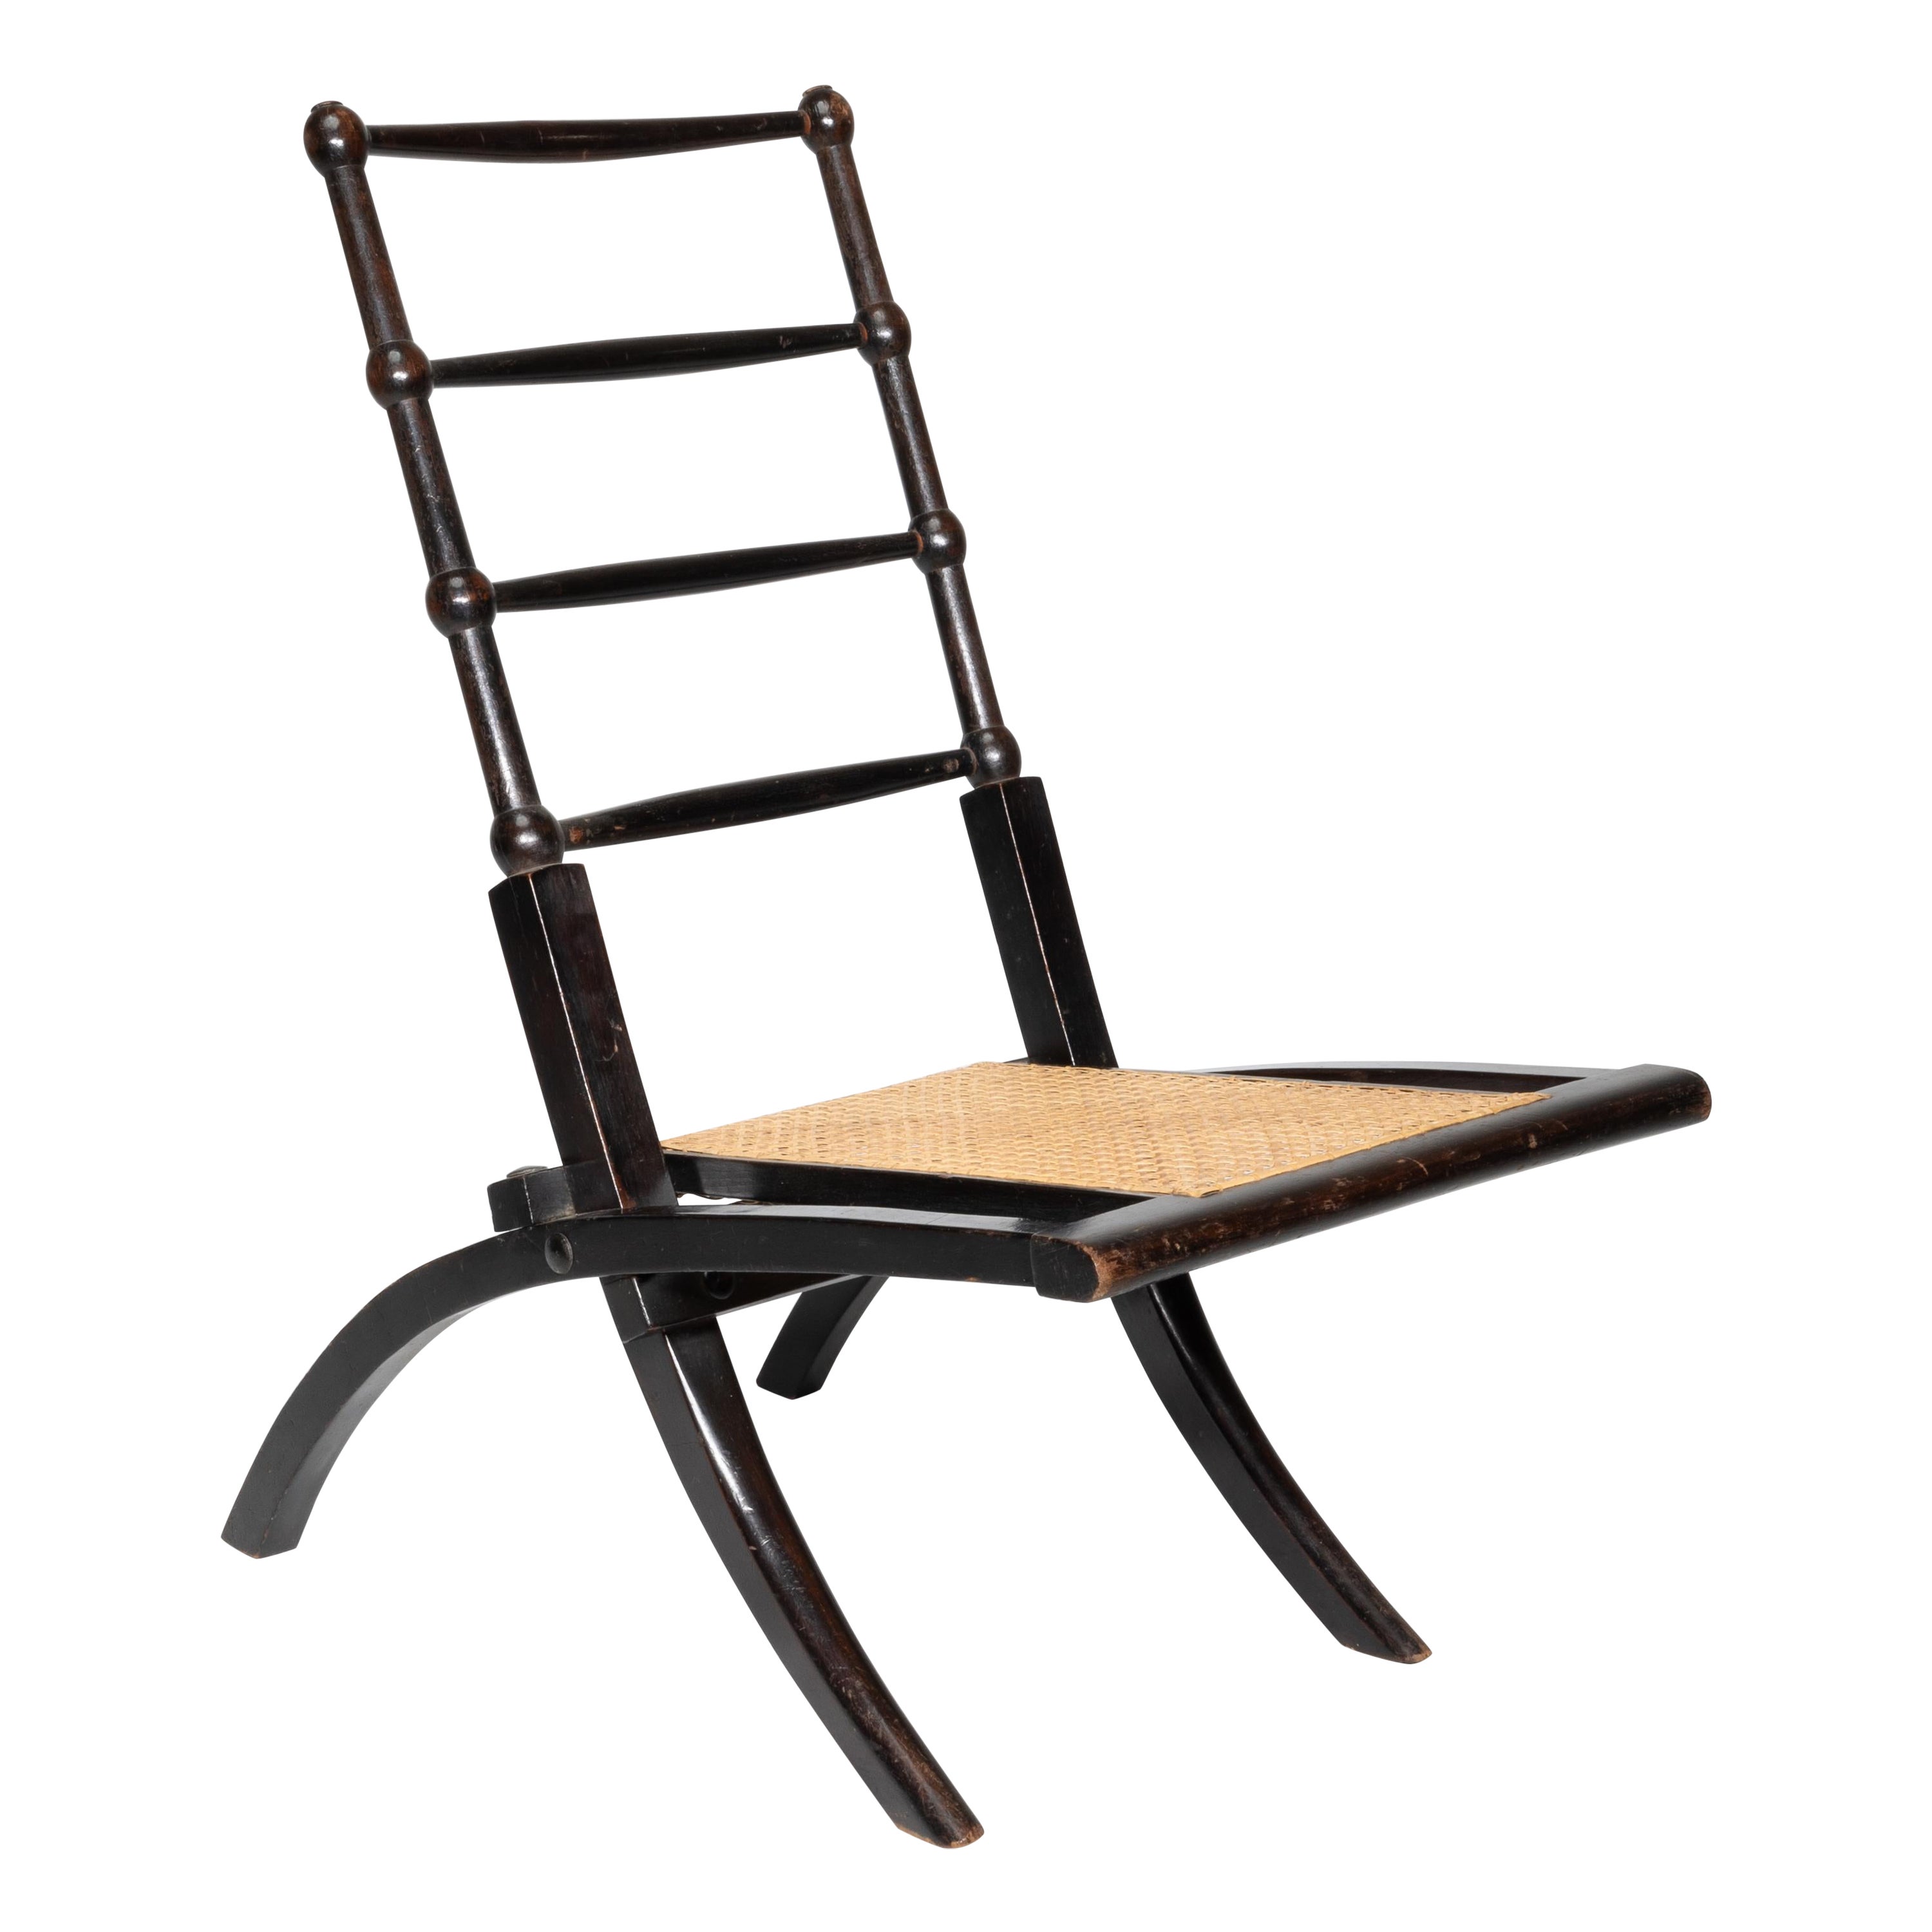 EW Godwin Style of. Aesthetic Movement ebonized folding chair with new cane seat